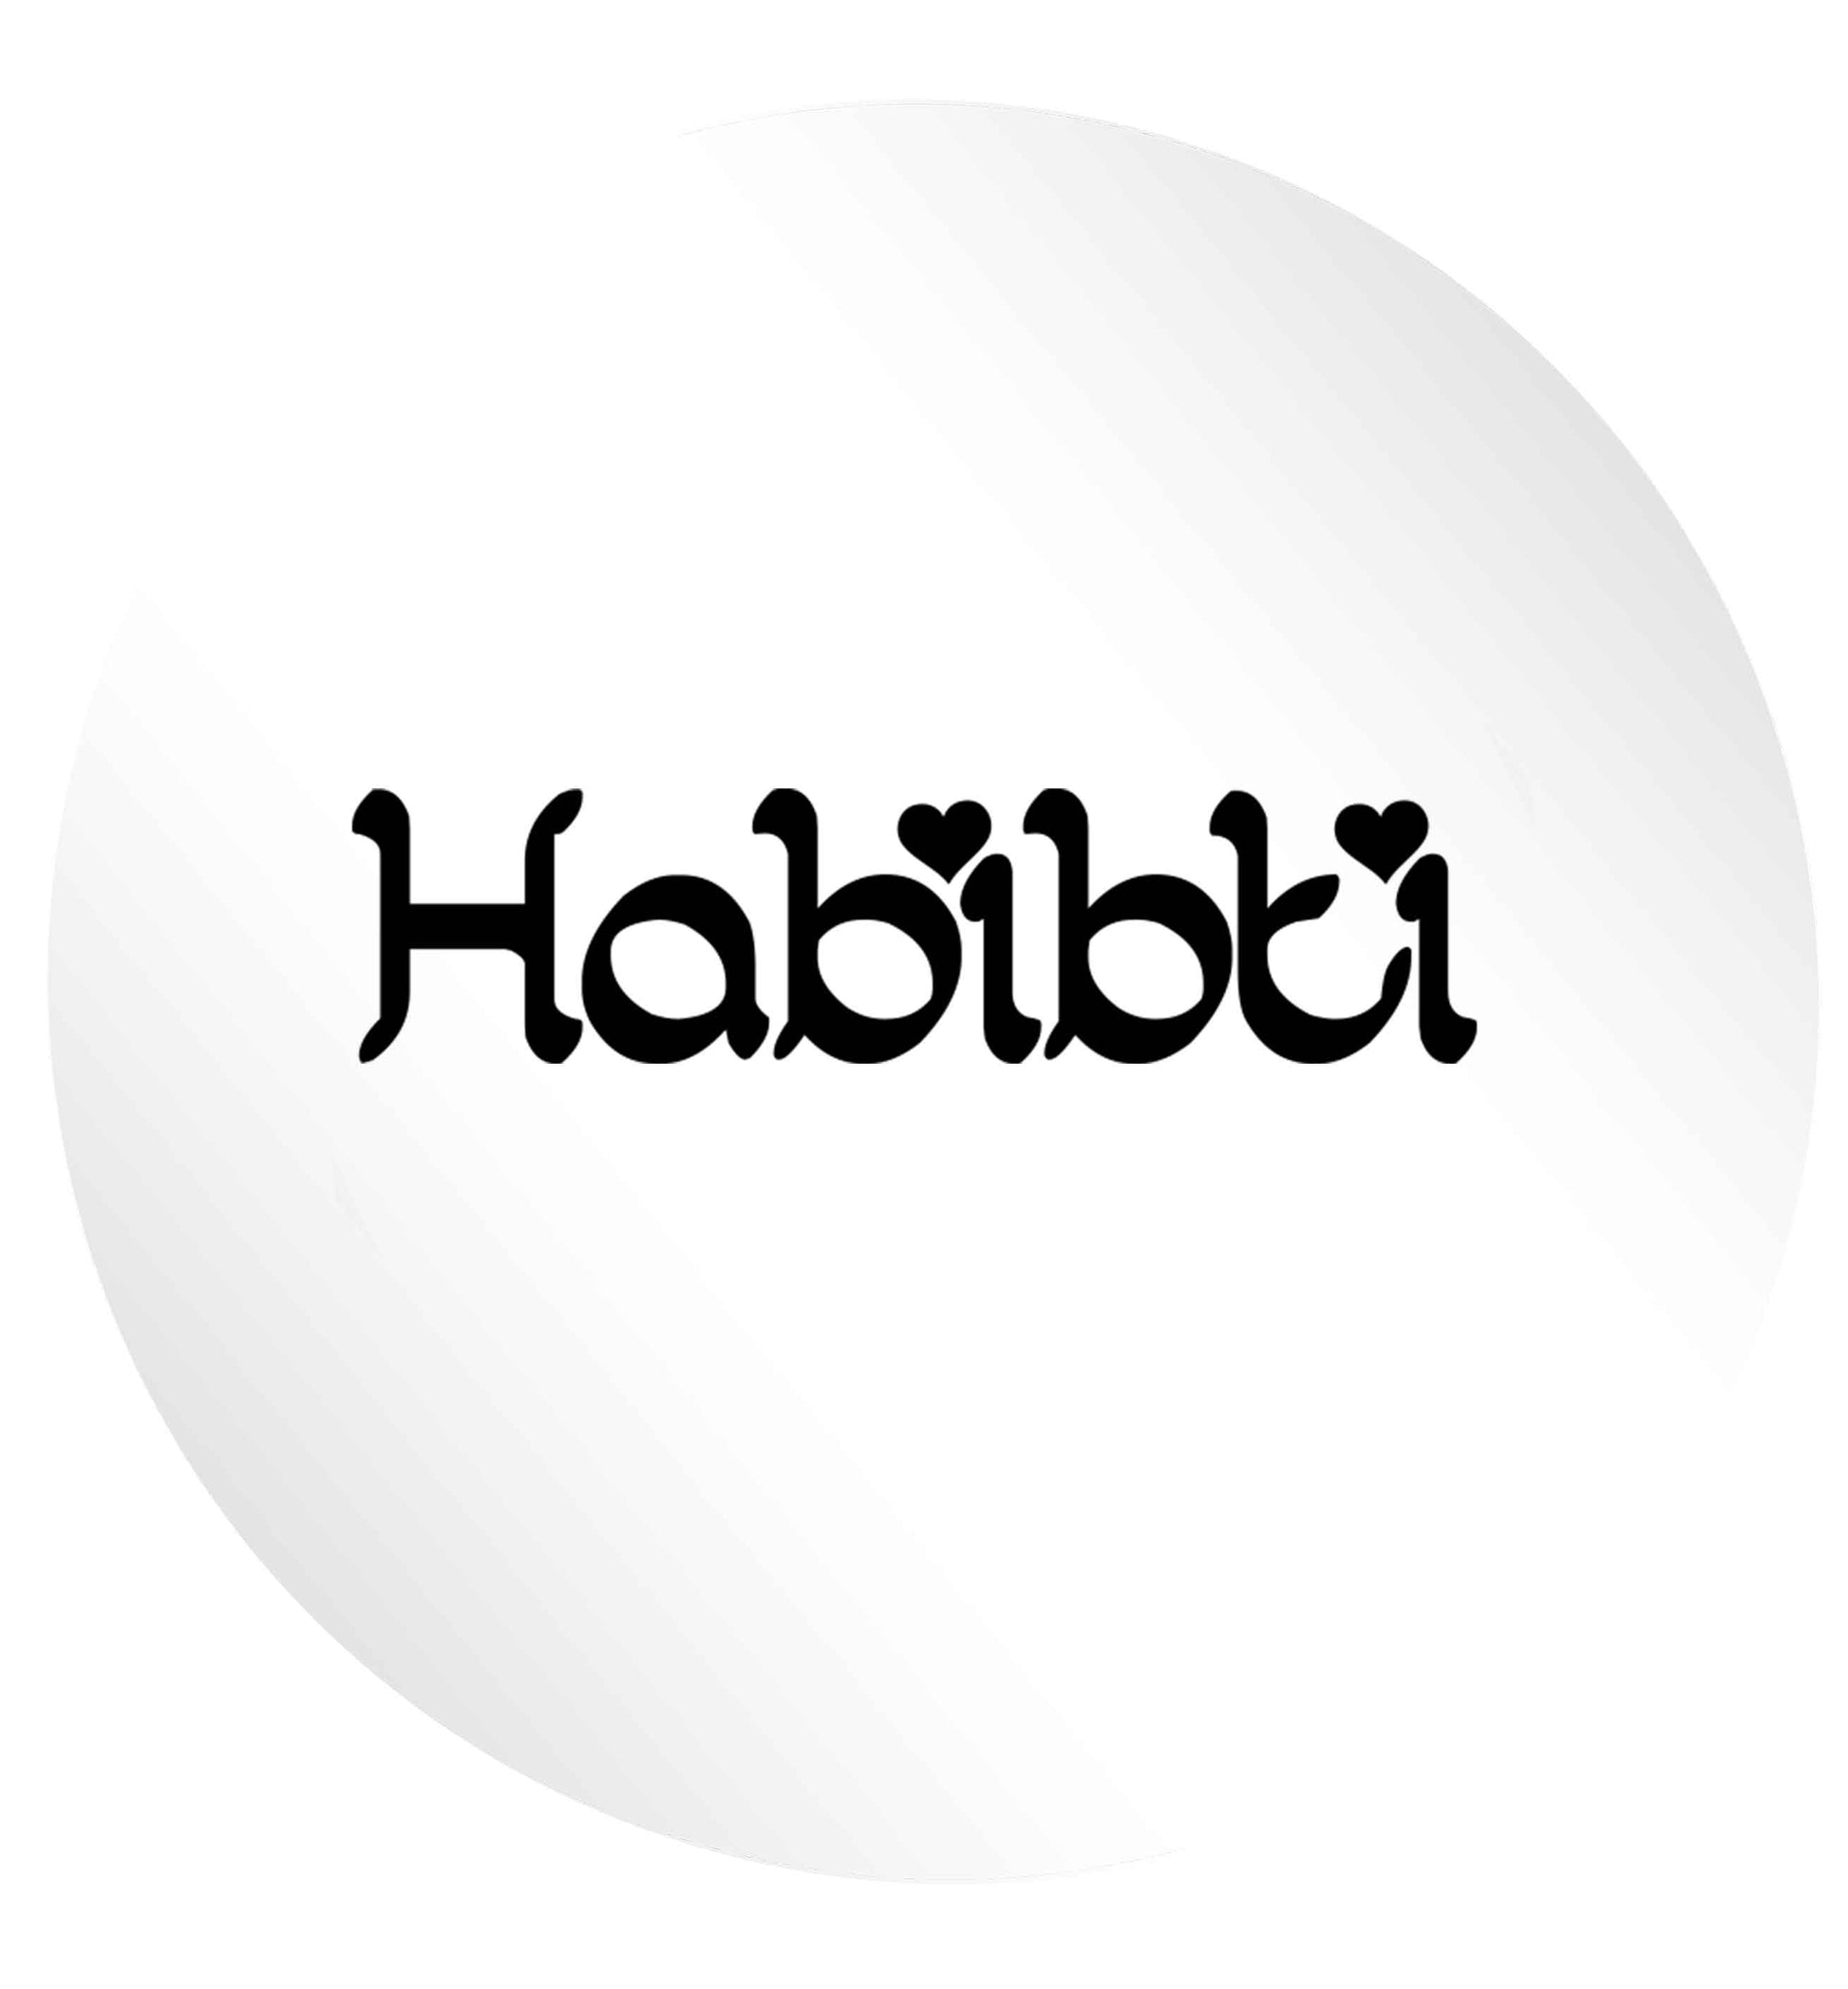 Habibiti 24 @ 45mm matt circle stickers